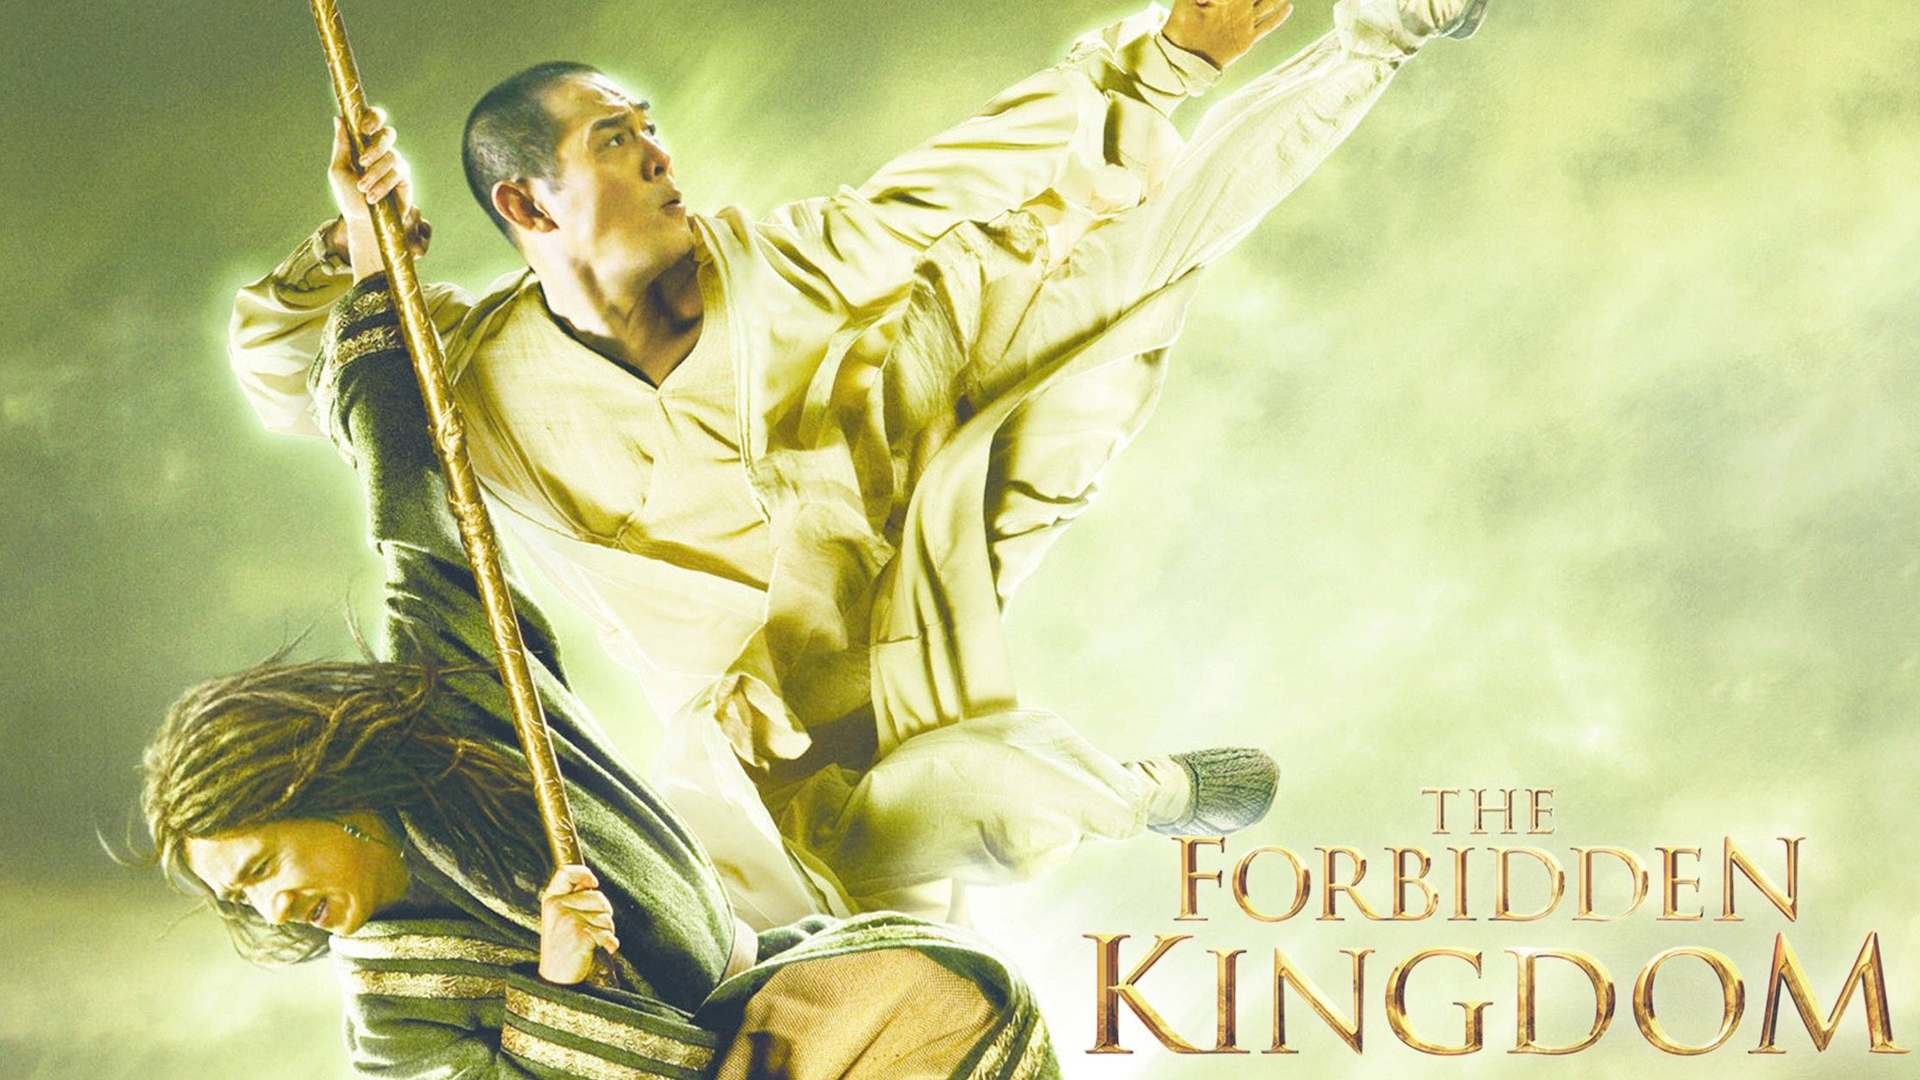 The Forbidden Kingdom movie cover